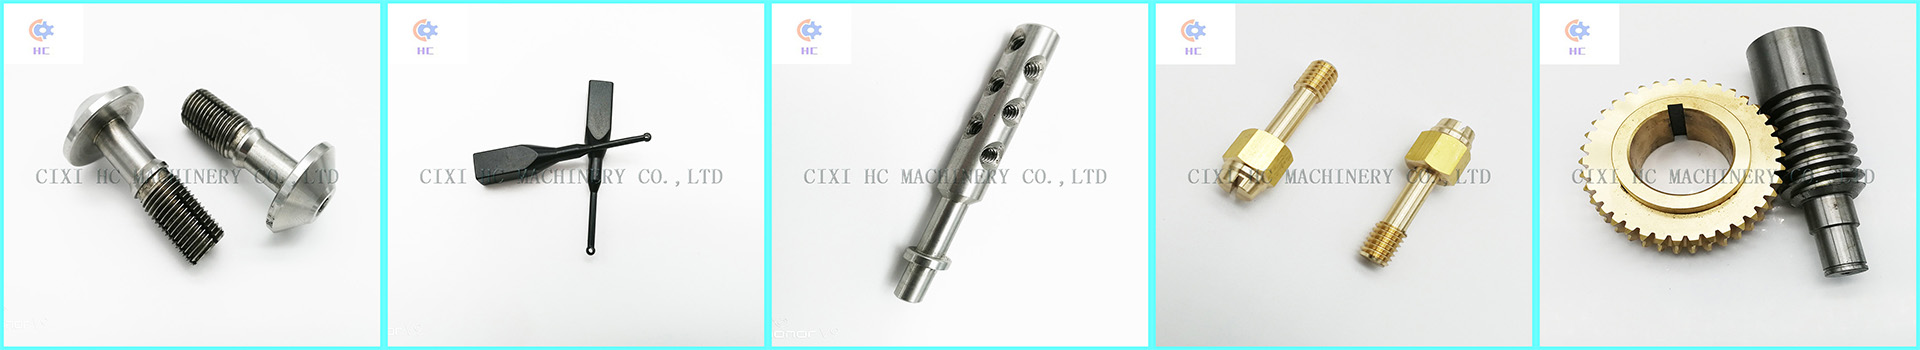 cixi hc machinery co.,ltd